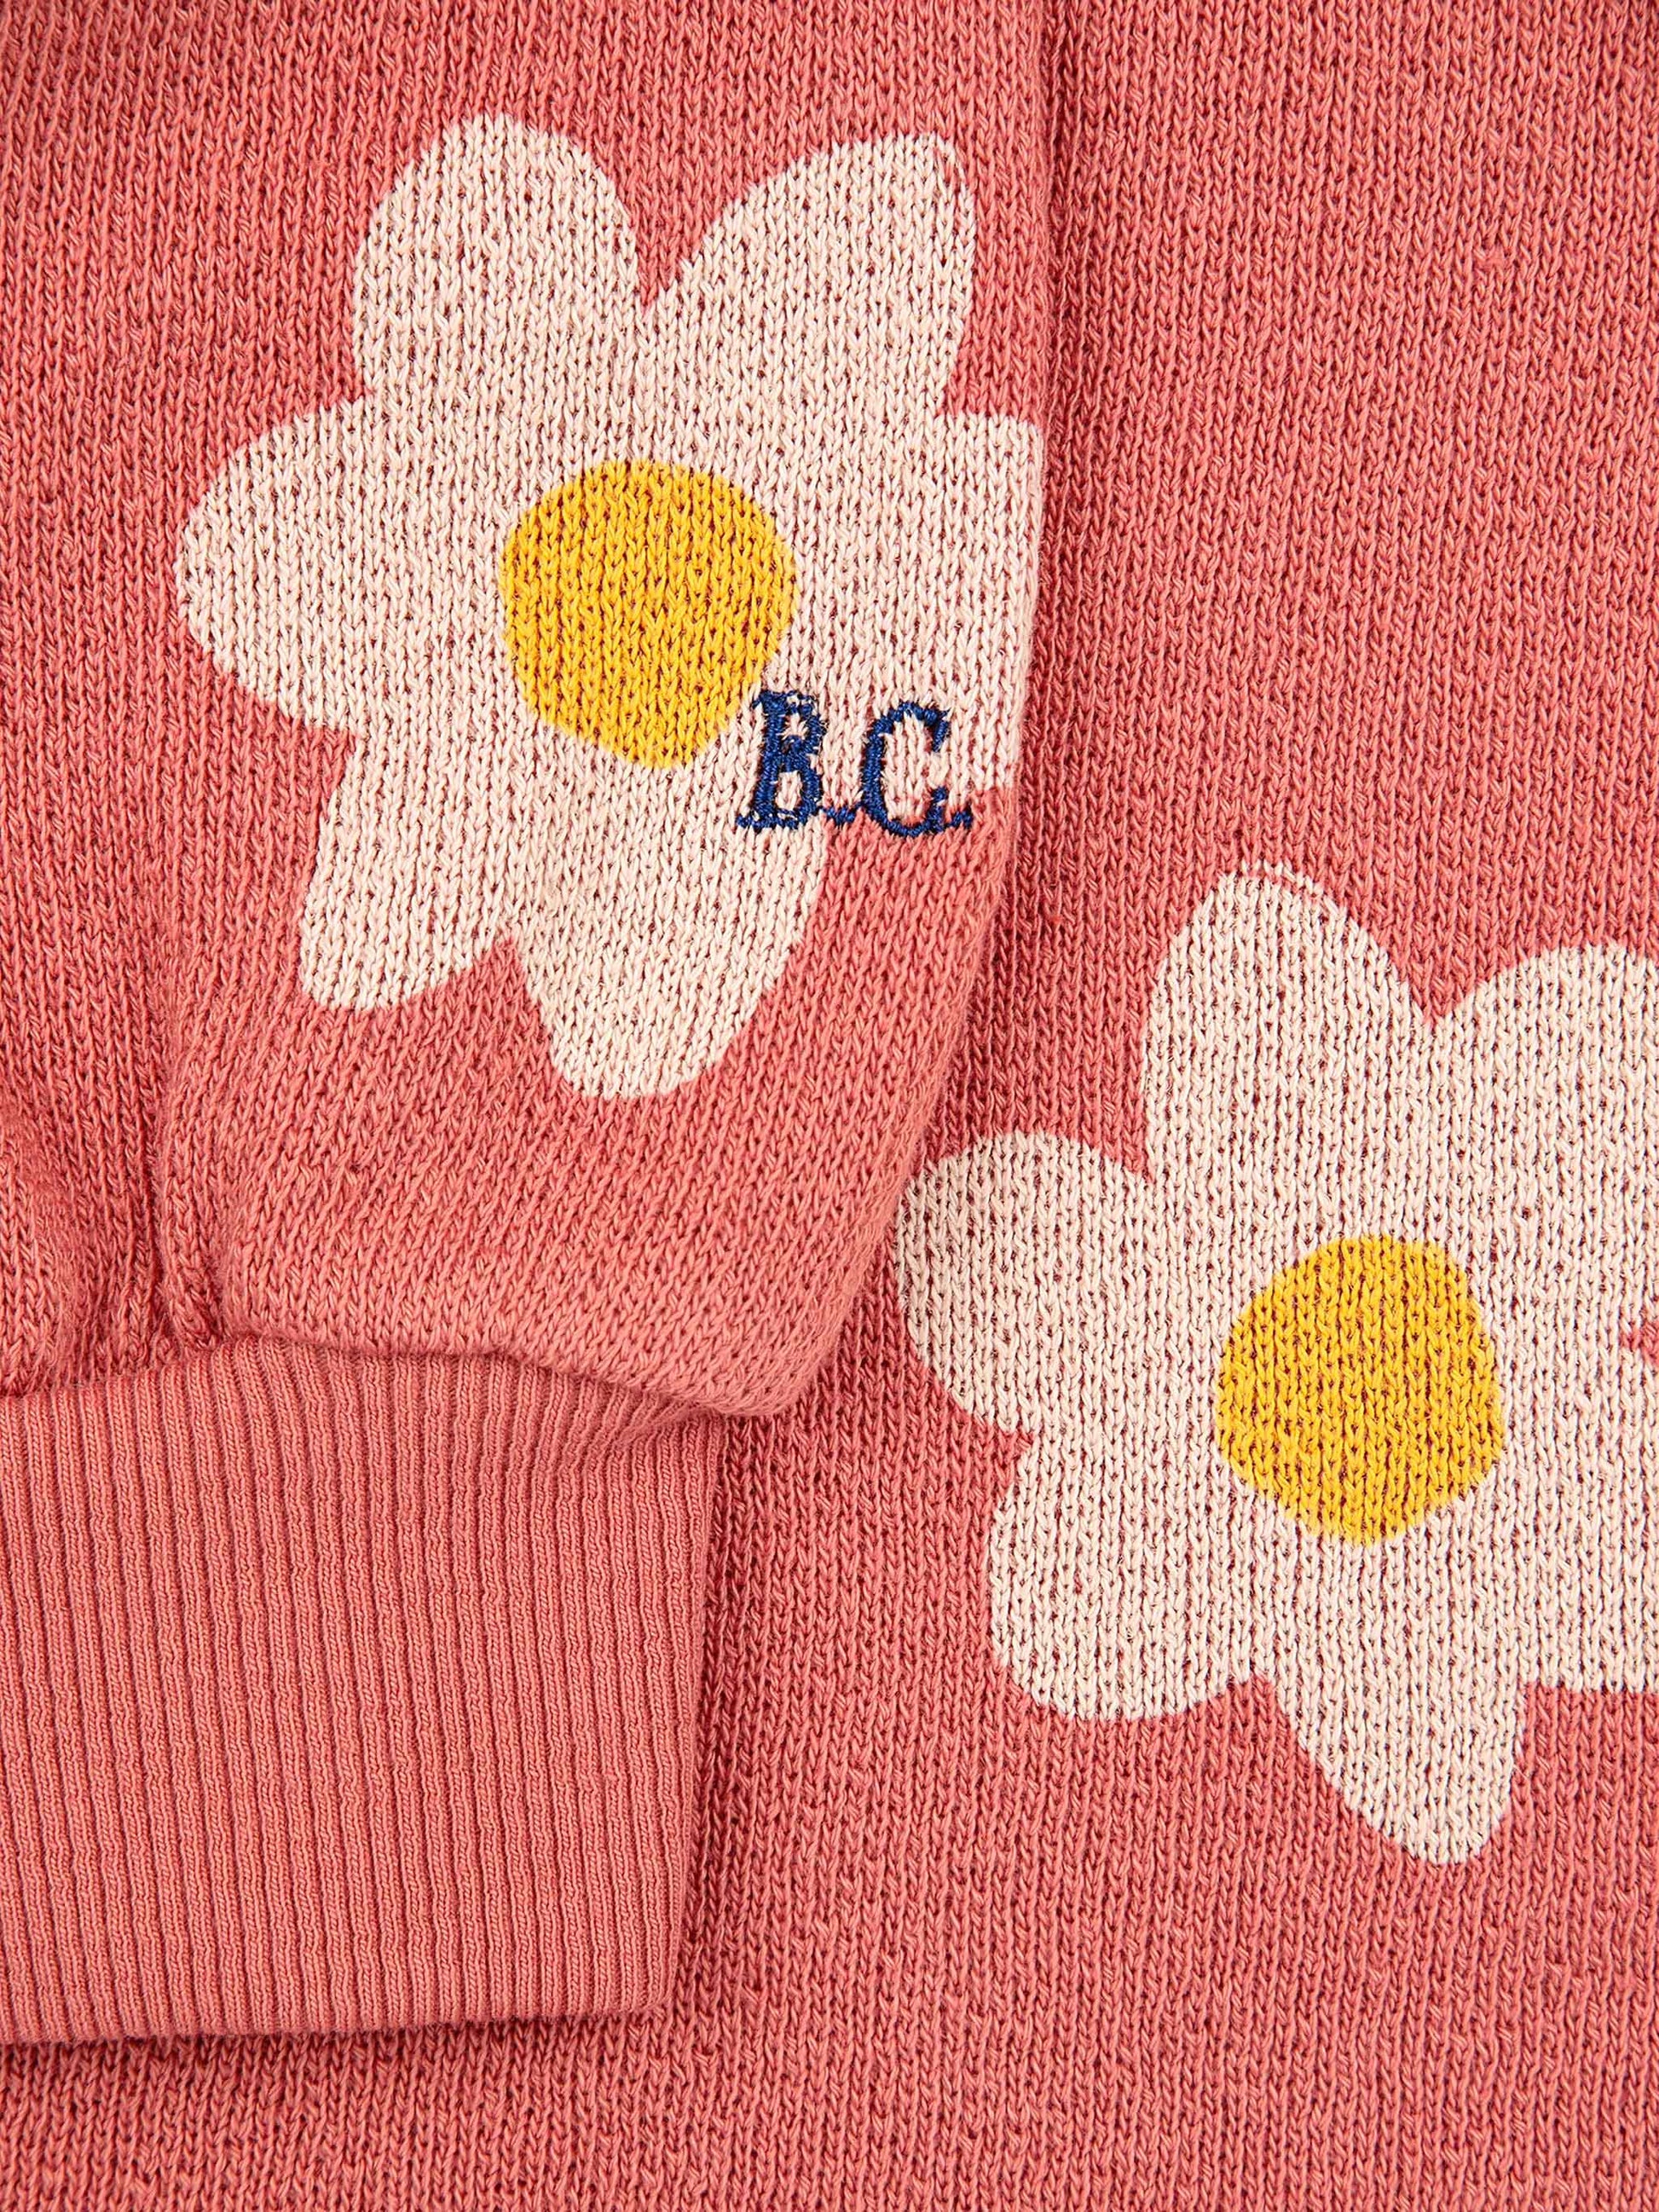 – all Choses Bobo Flower over Big sweatshirt